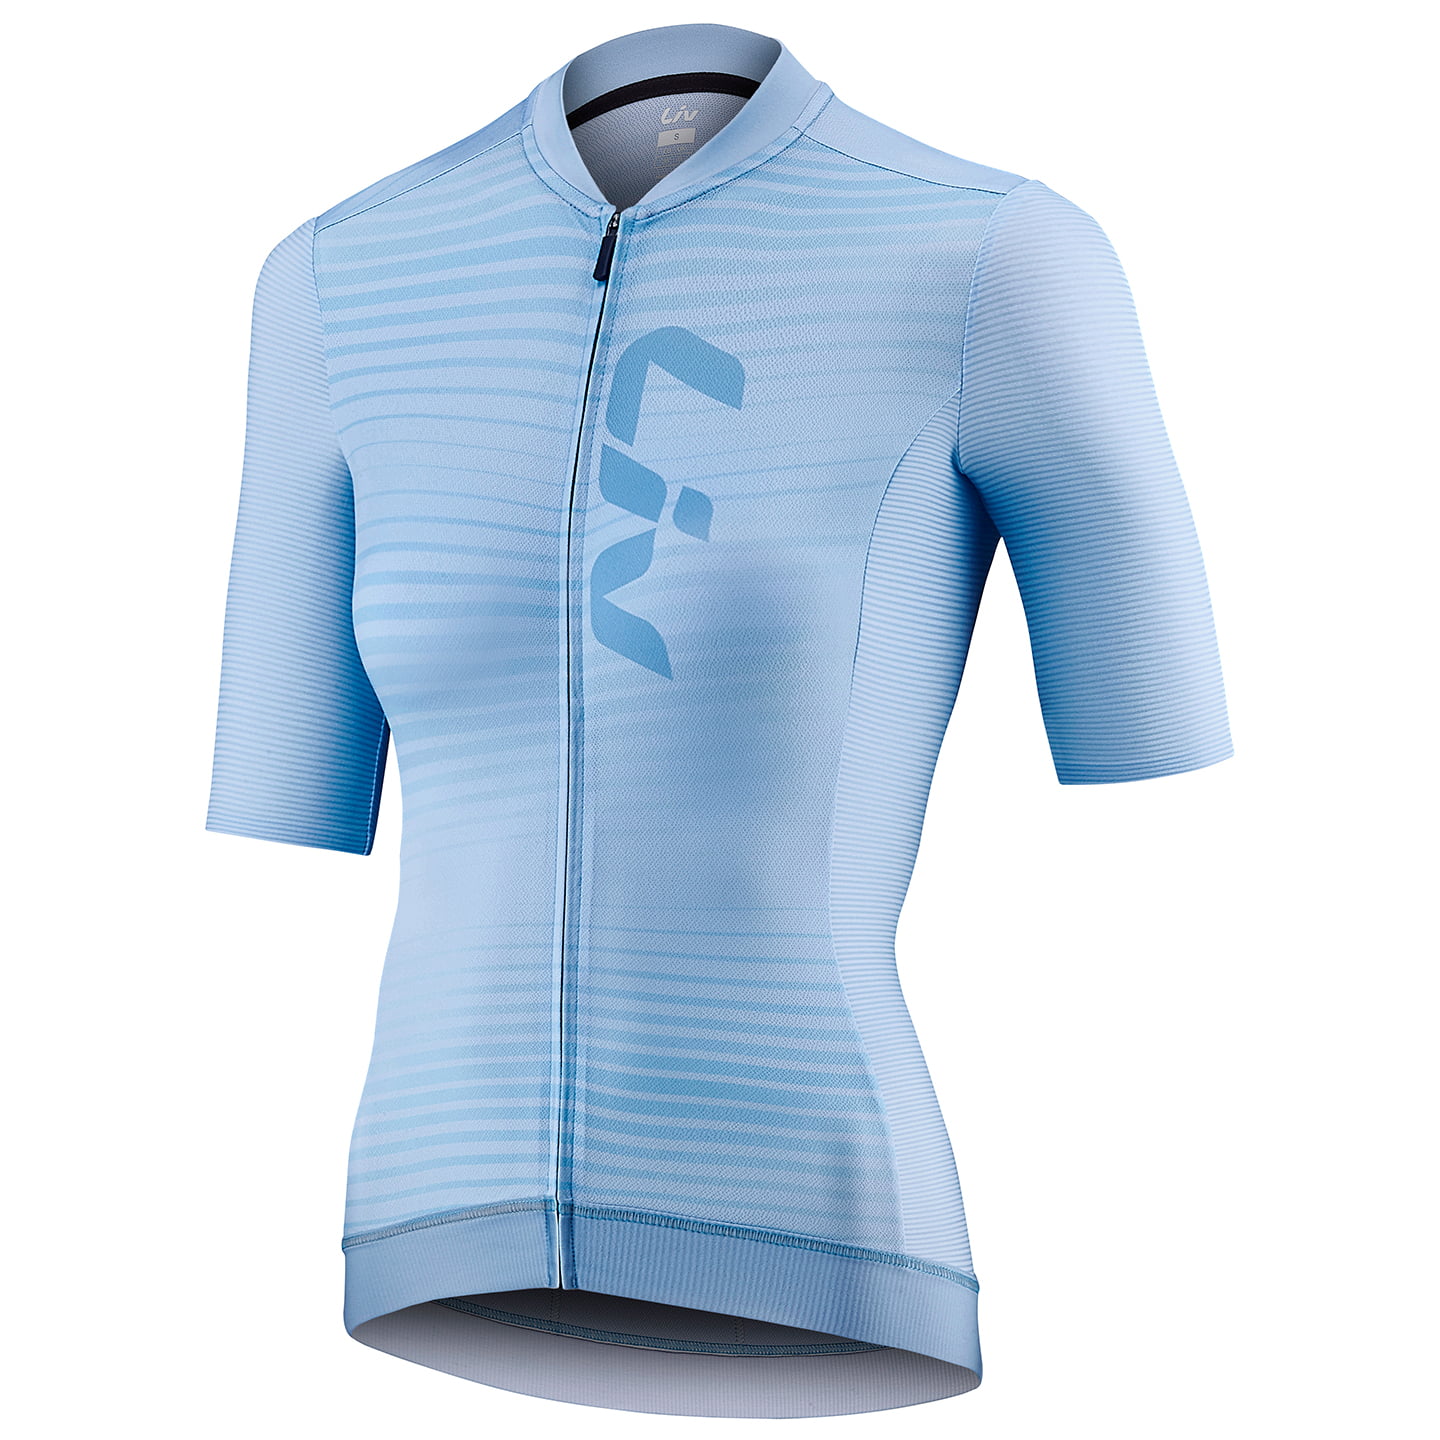 LIV Facile Women’s Jersey Women’s Short Sleeve Jersey, size XL, Cycle jersey, Bike gear